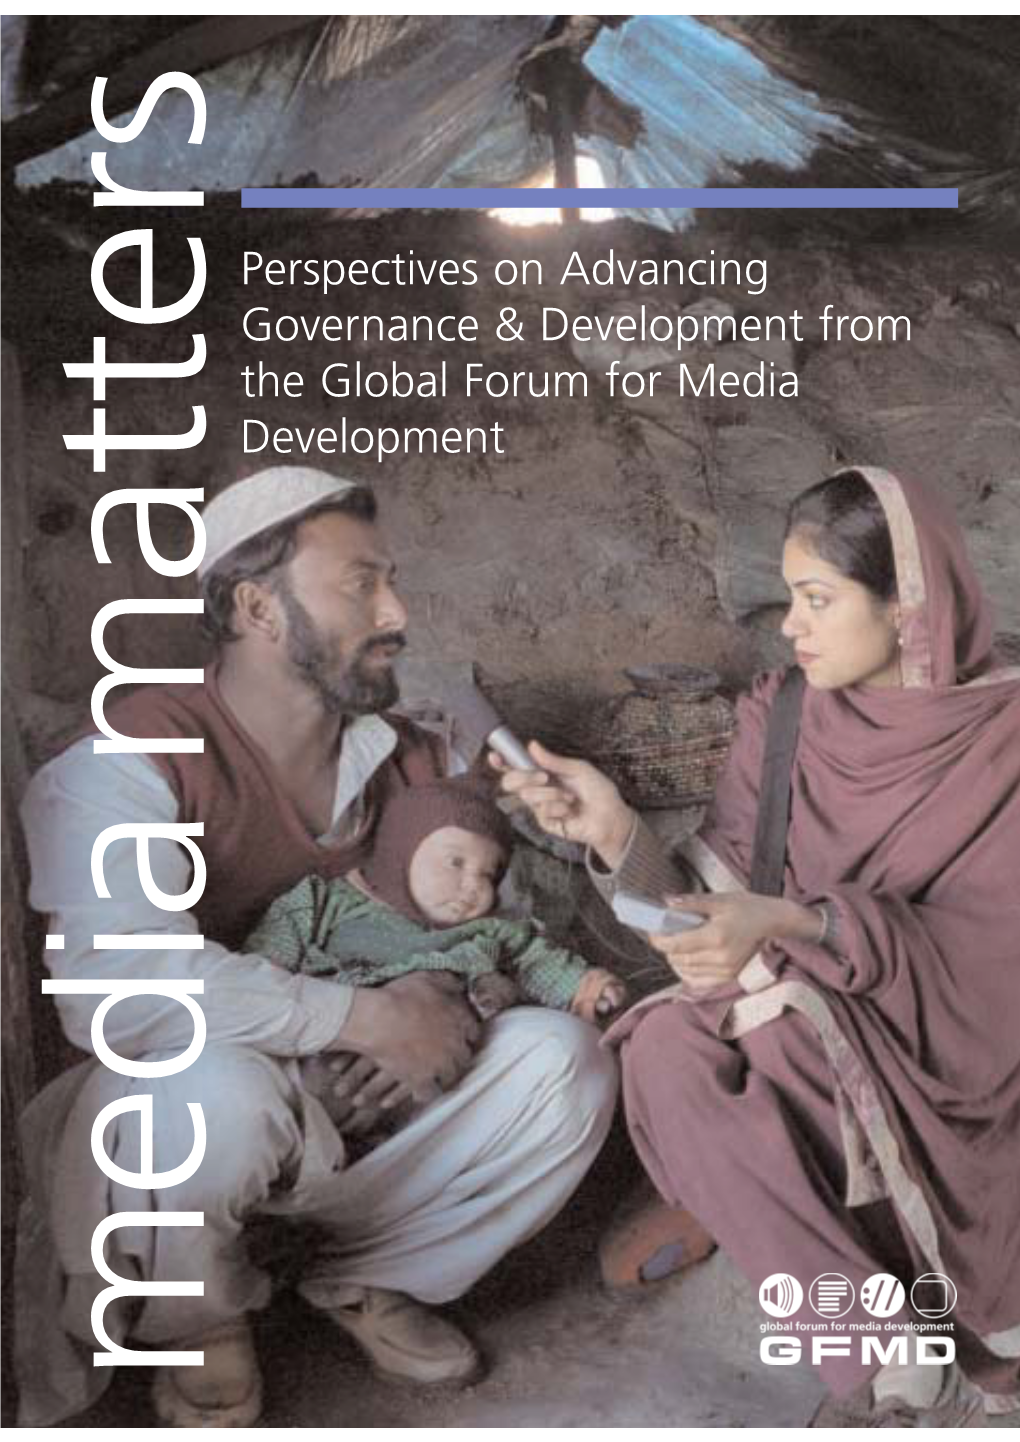 Media Mattersdevelopment the Globalforumformedia &Development from Governance Perspectives Onadvancing Ei Matters Media